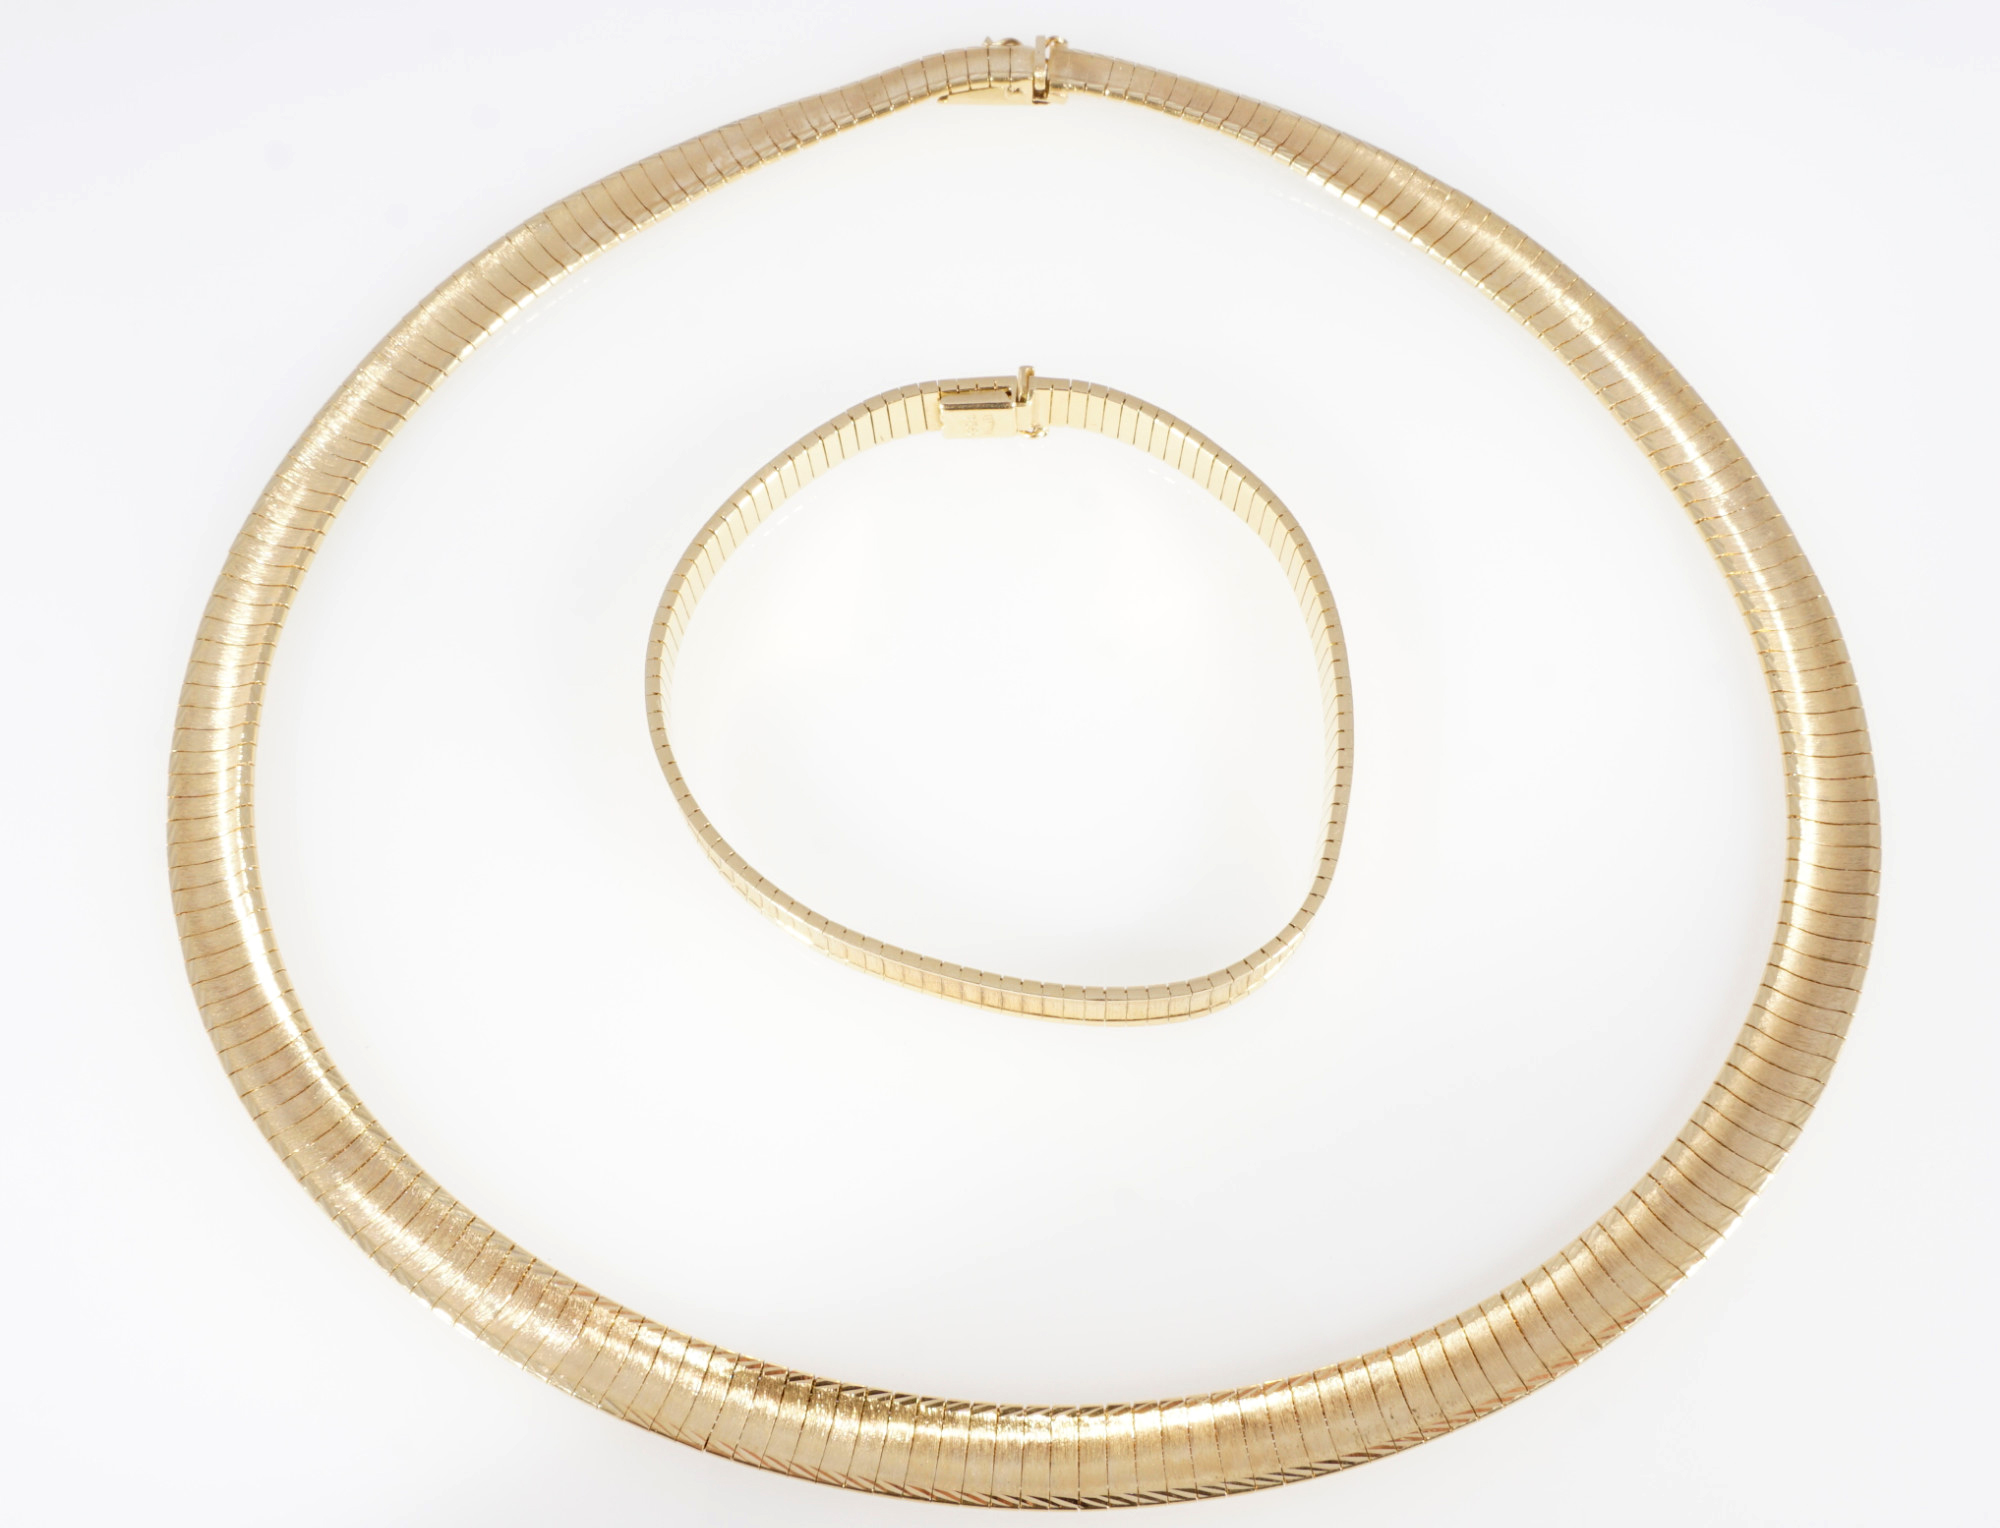 750 jewelry set - gold necklace and bracelet, 18K Gold Schmuckset - Collier und Armband,